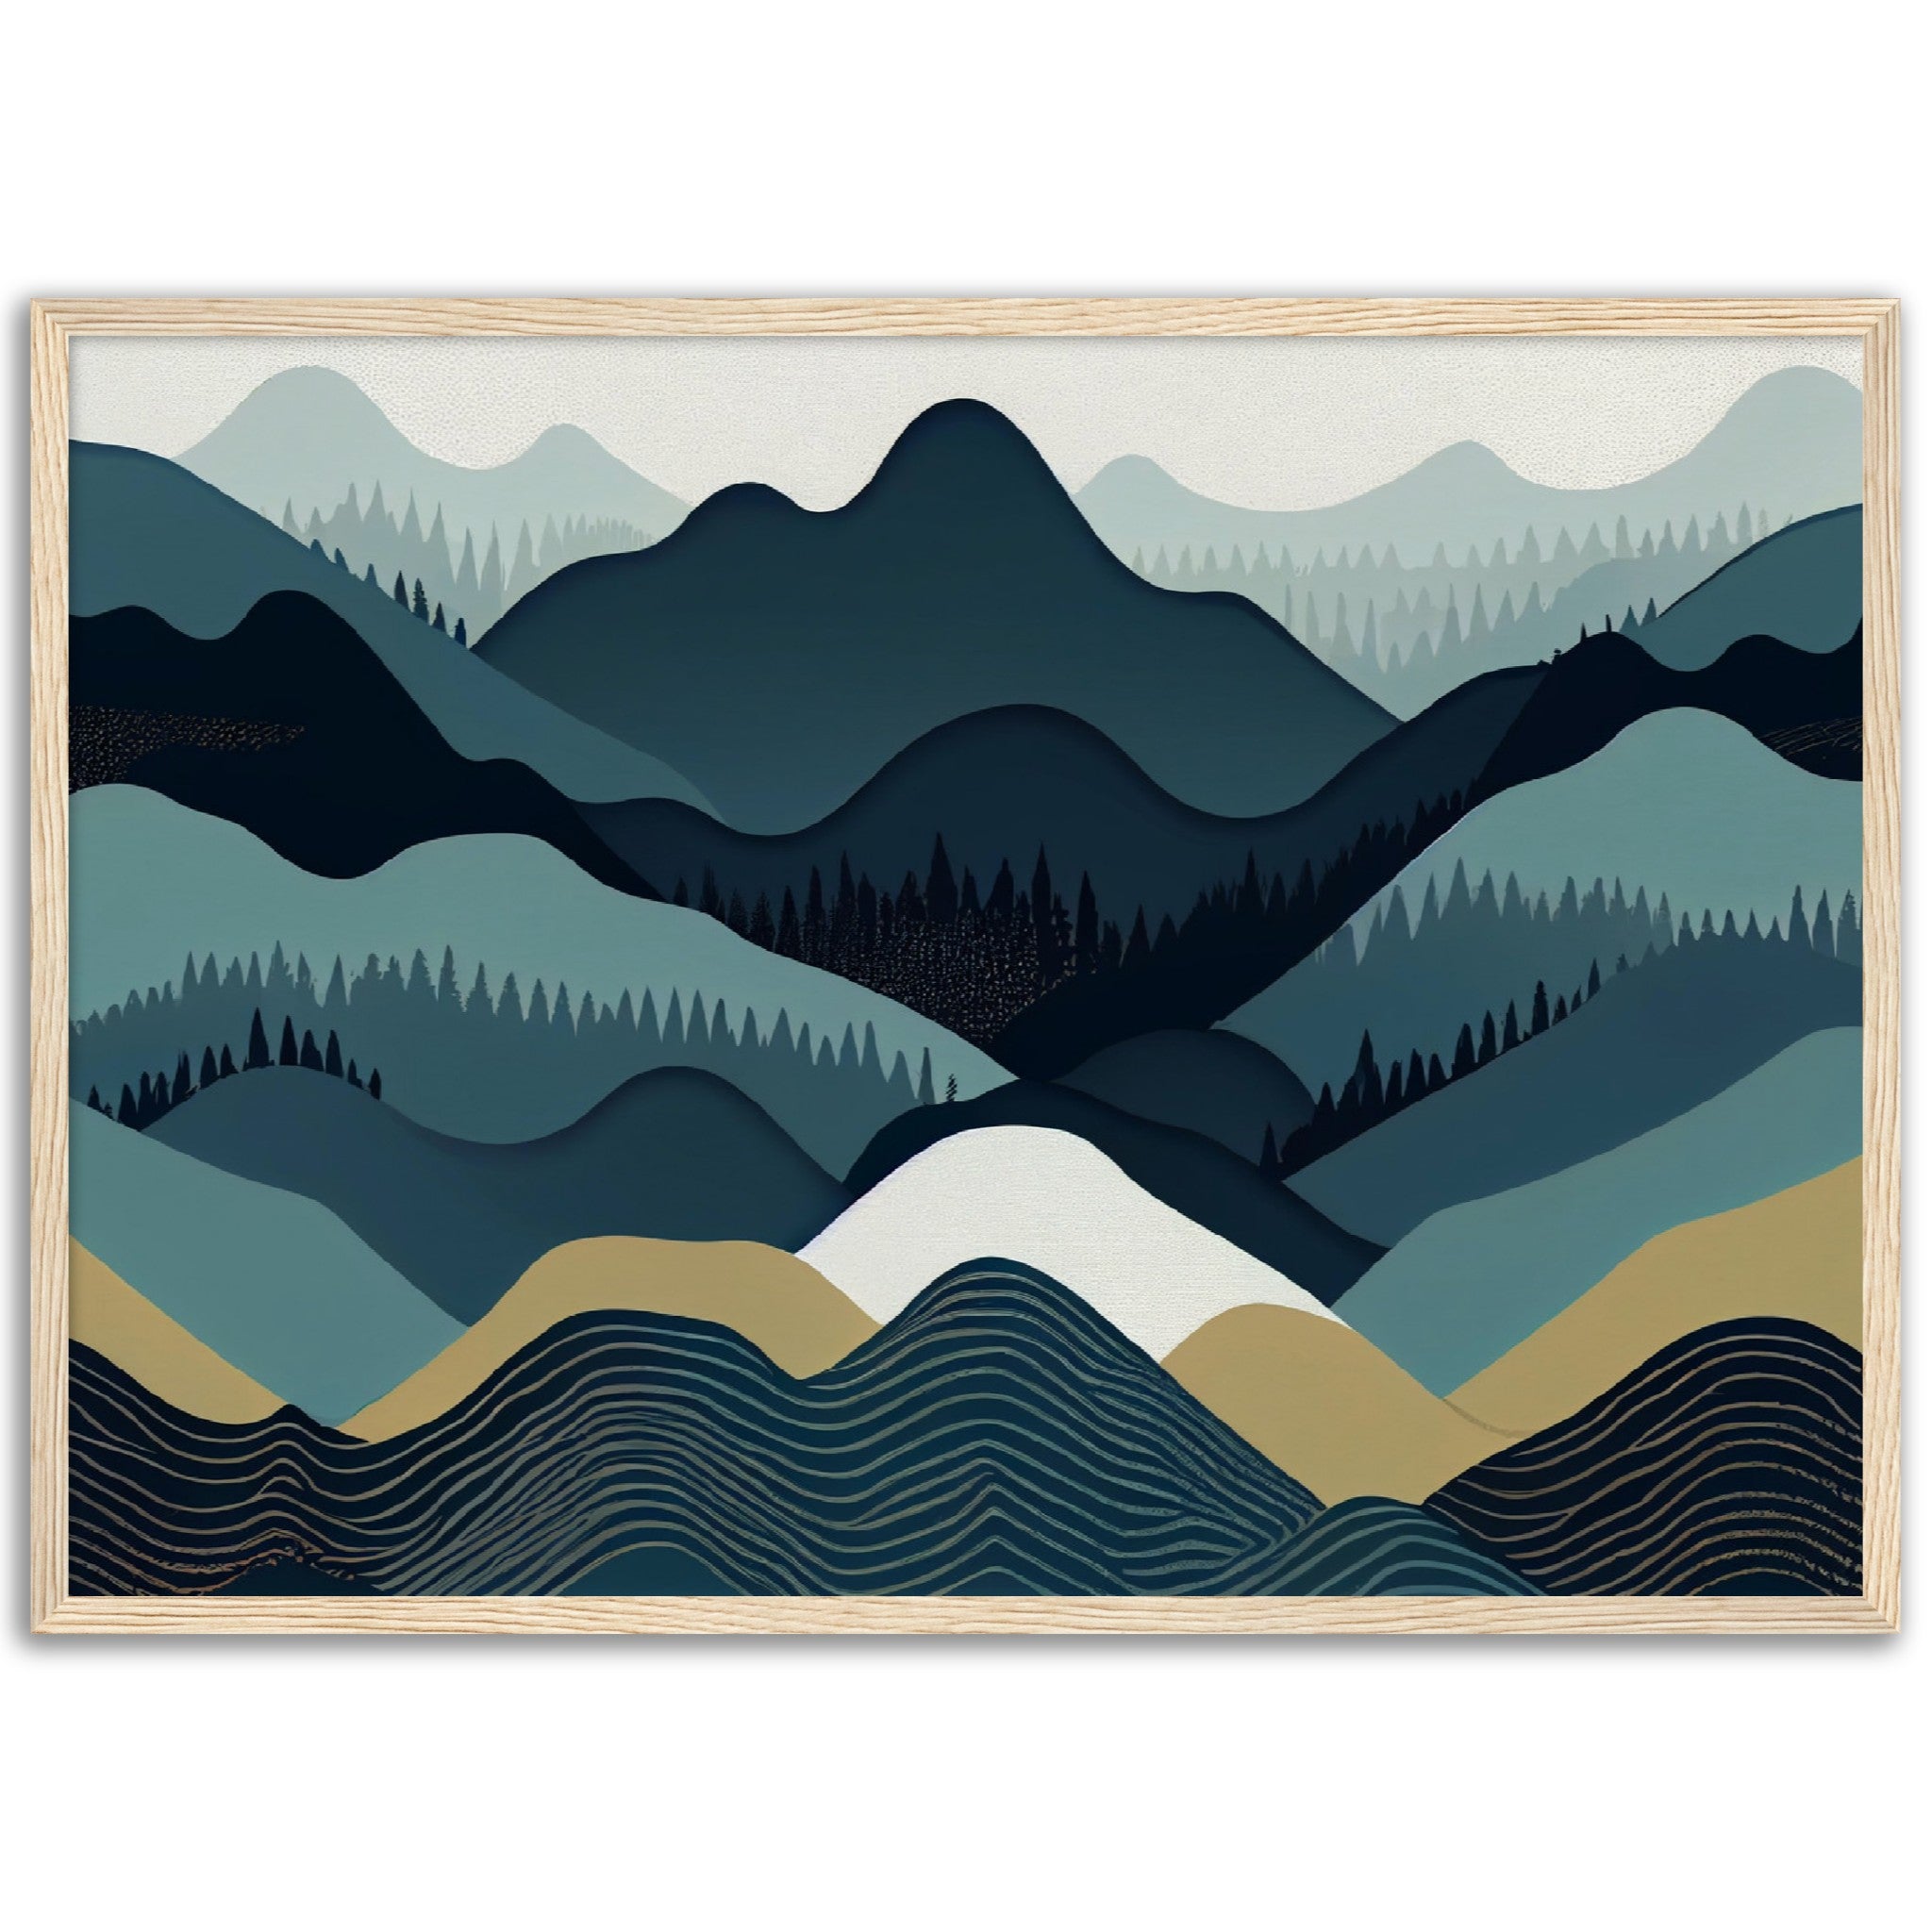 Minimalist Landscape Grey Peaks - immersiarts